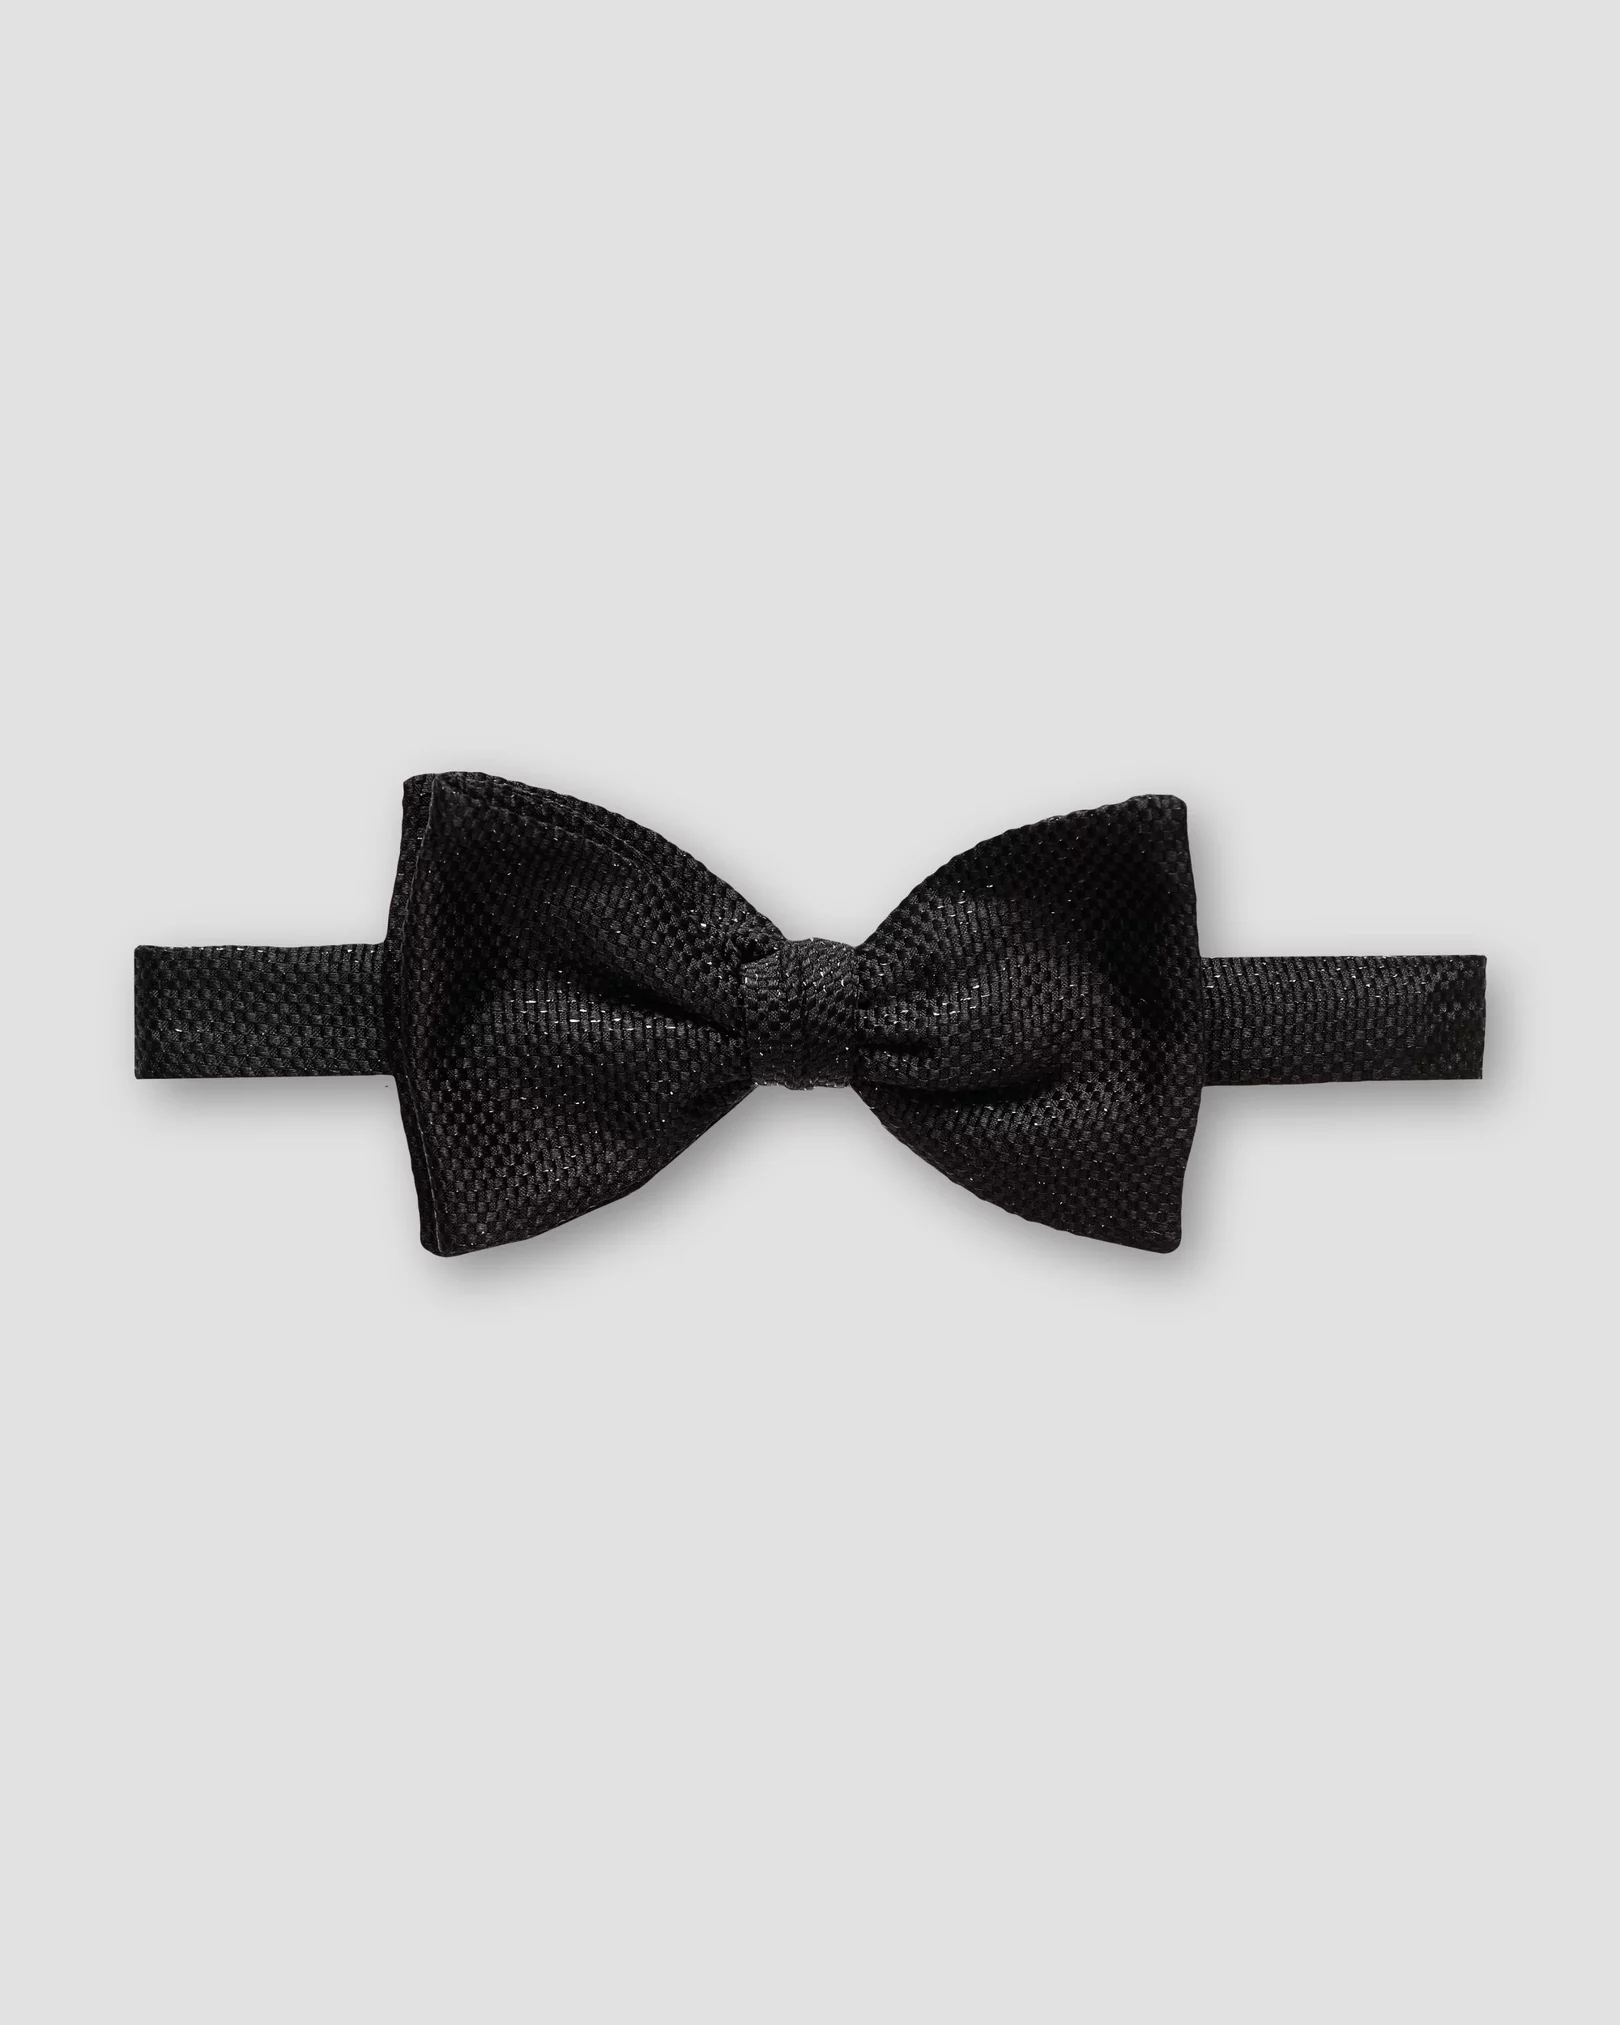 Black silk bow tie - ready tied